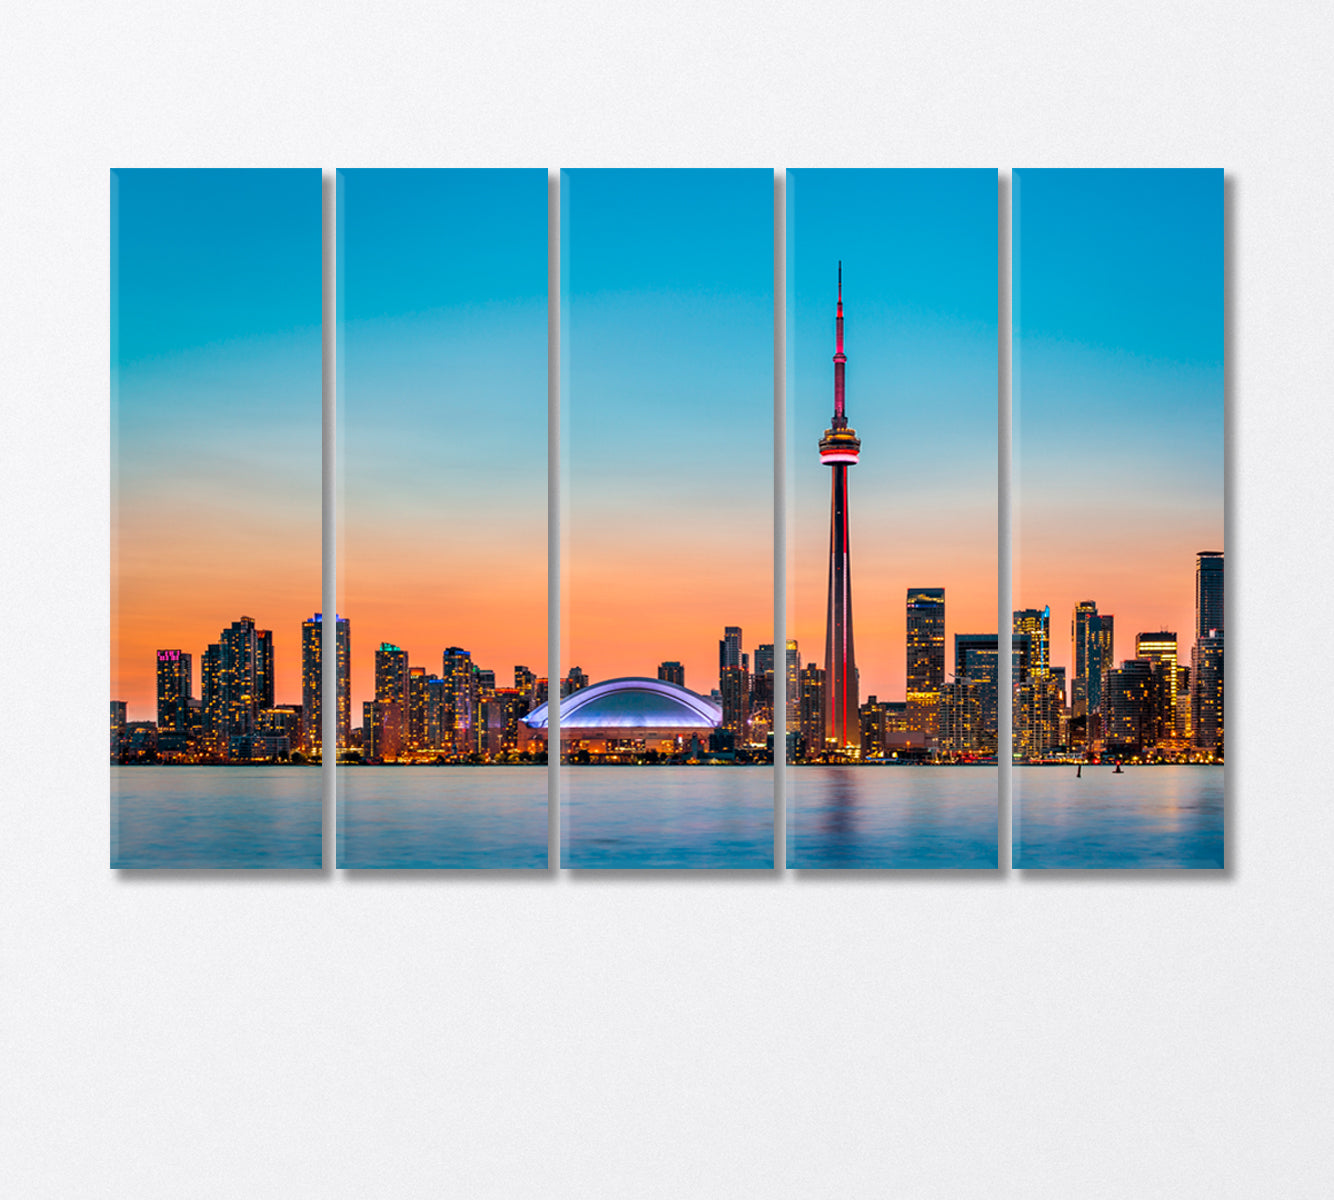 Skyline Toronto over Ontario Lake at Twilight Canvas Print-Canvas Print-CetArt-5 Panels-36x24 inches-CetArt